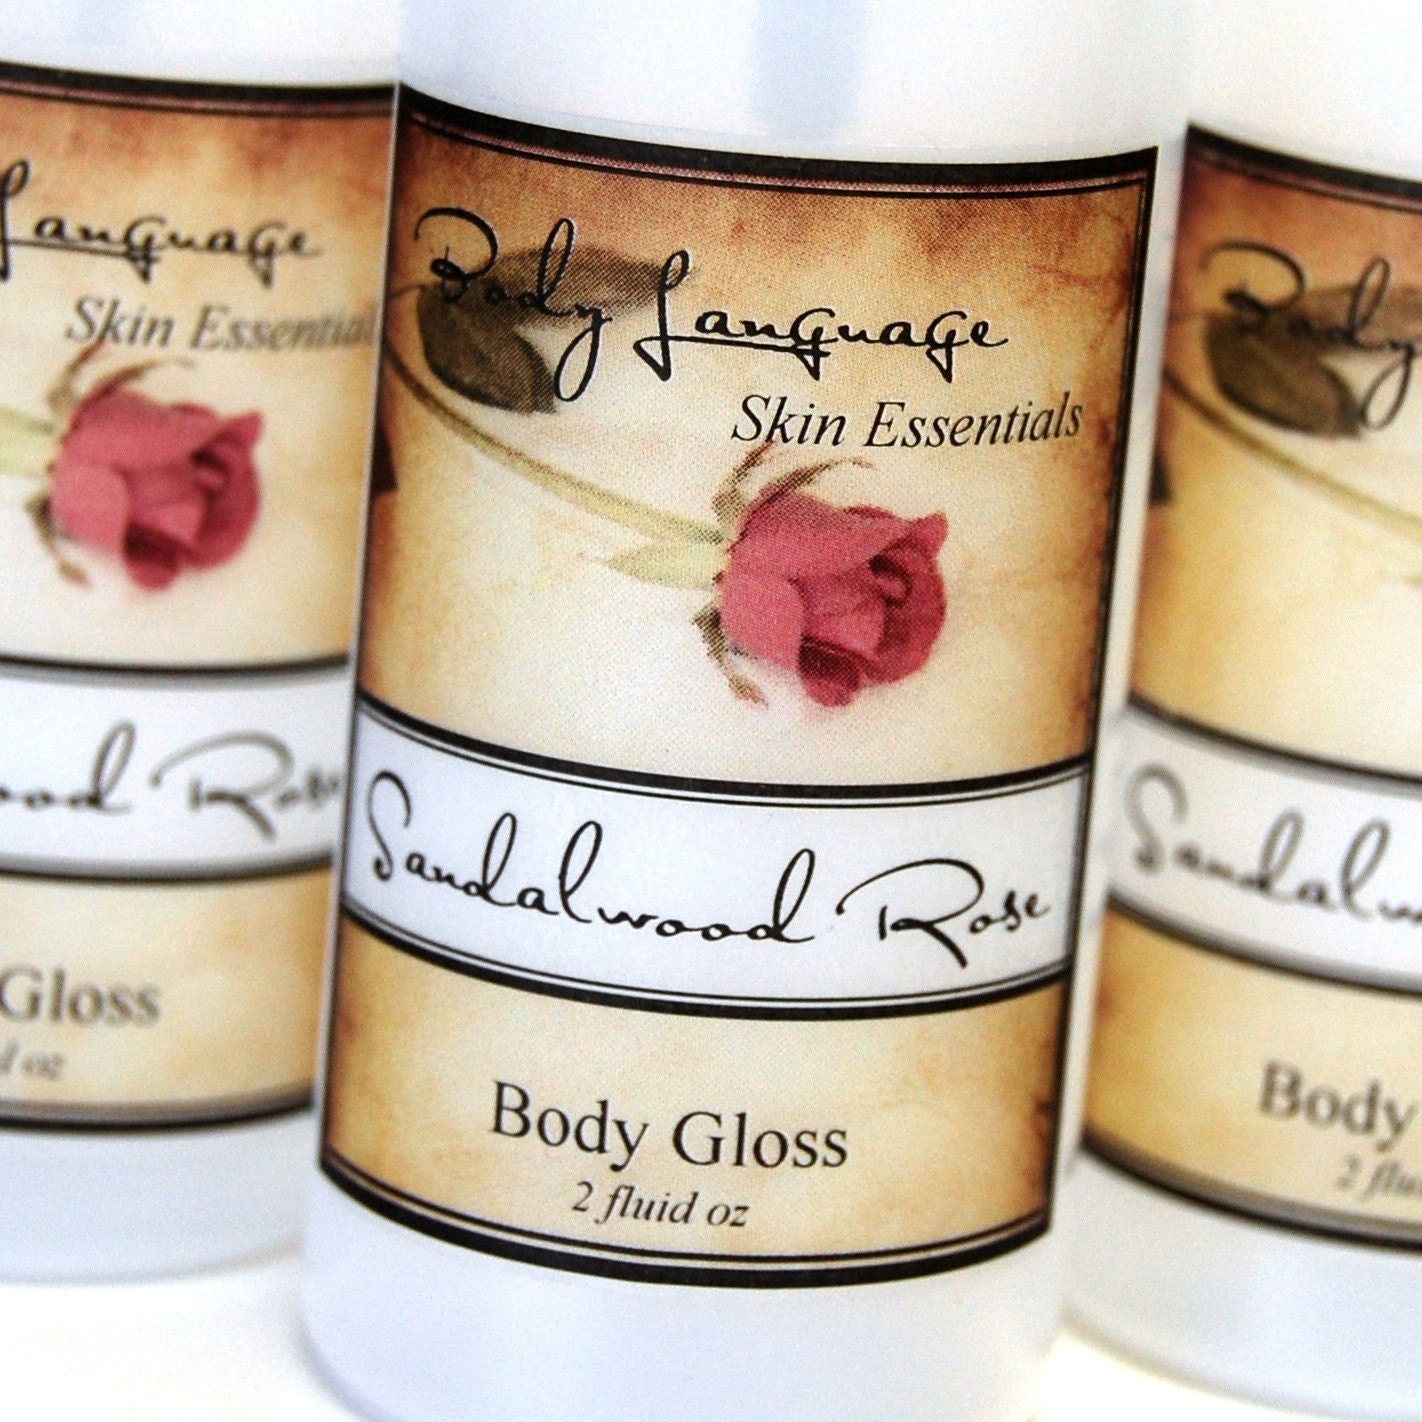 Sandalwood Rose Body Gloss - Sensual Scented After Bath Body Spray